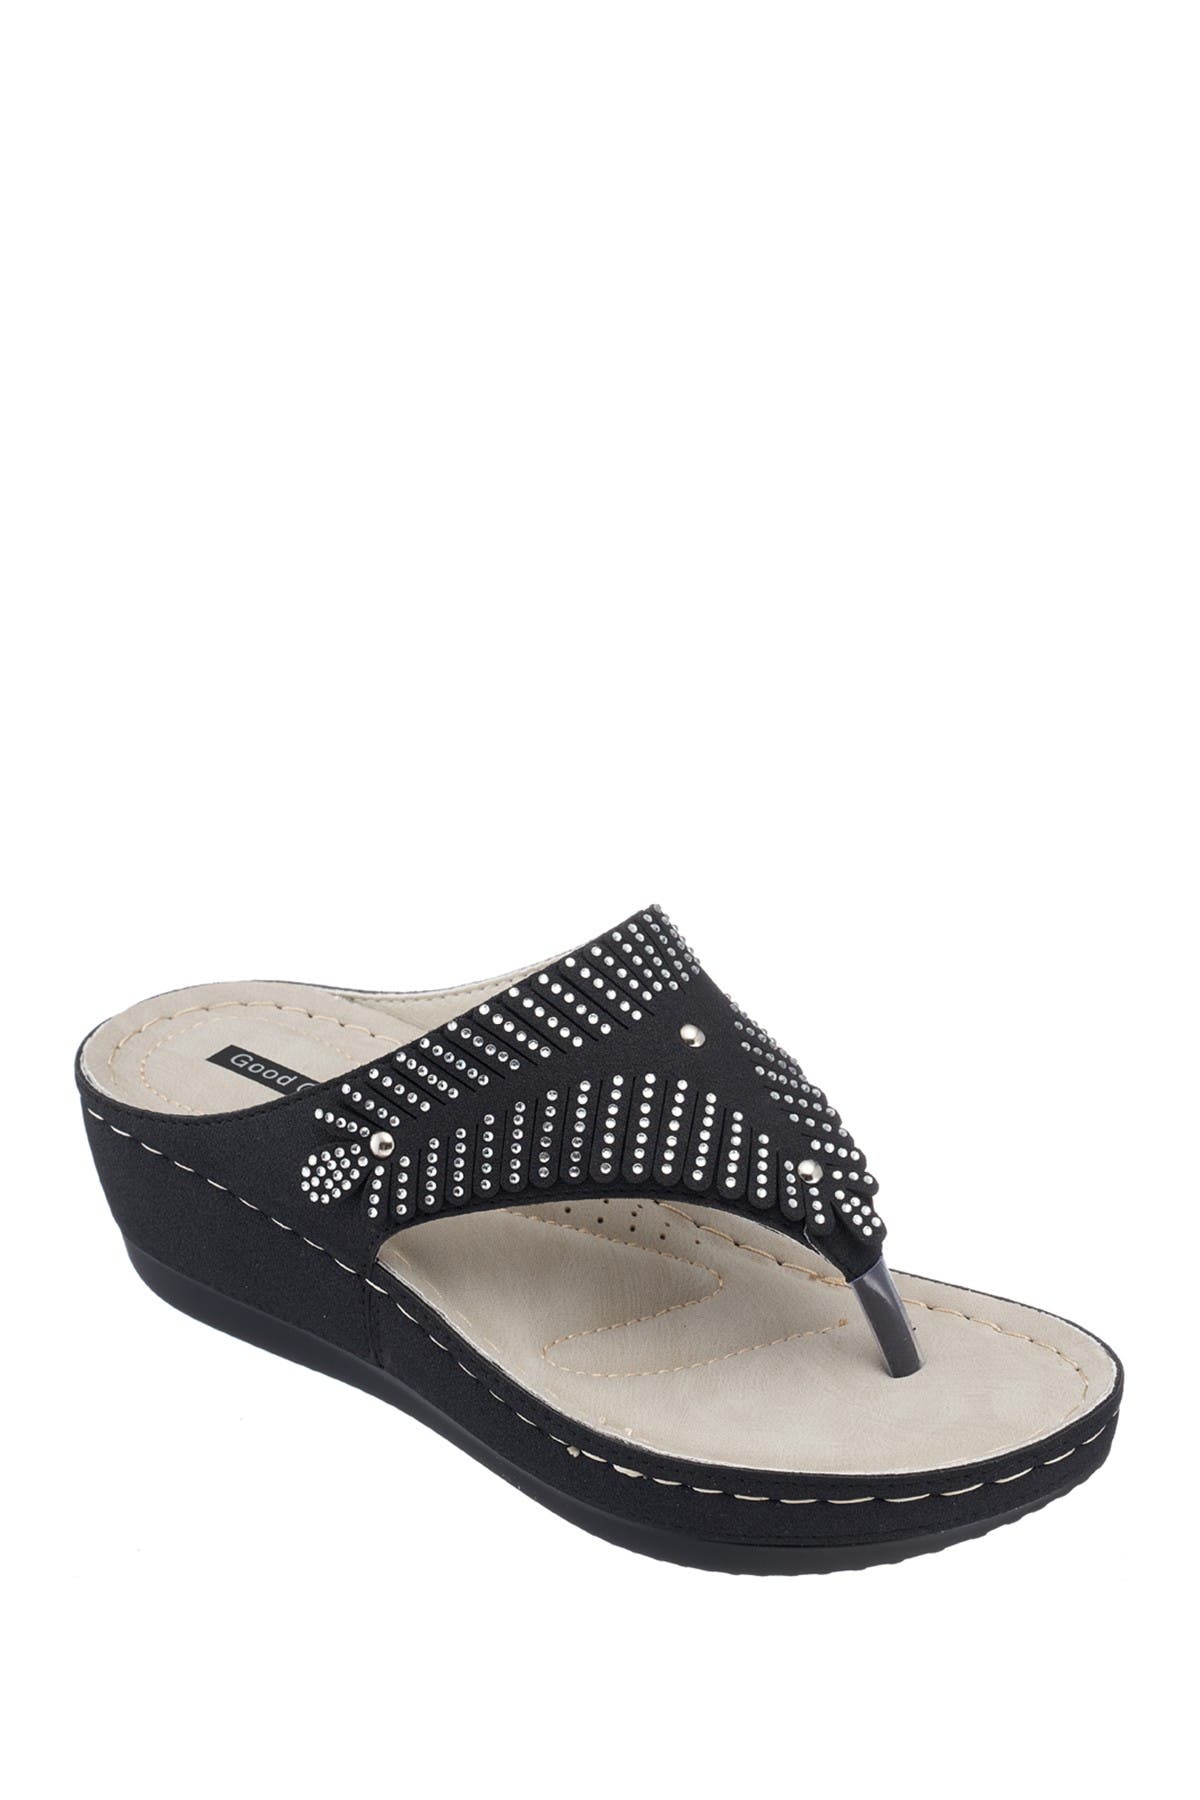 GC Shoes | Virginia Rhinestone Wedge Thong Sandal | Nordstrom Rack